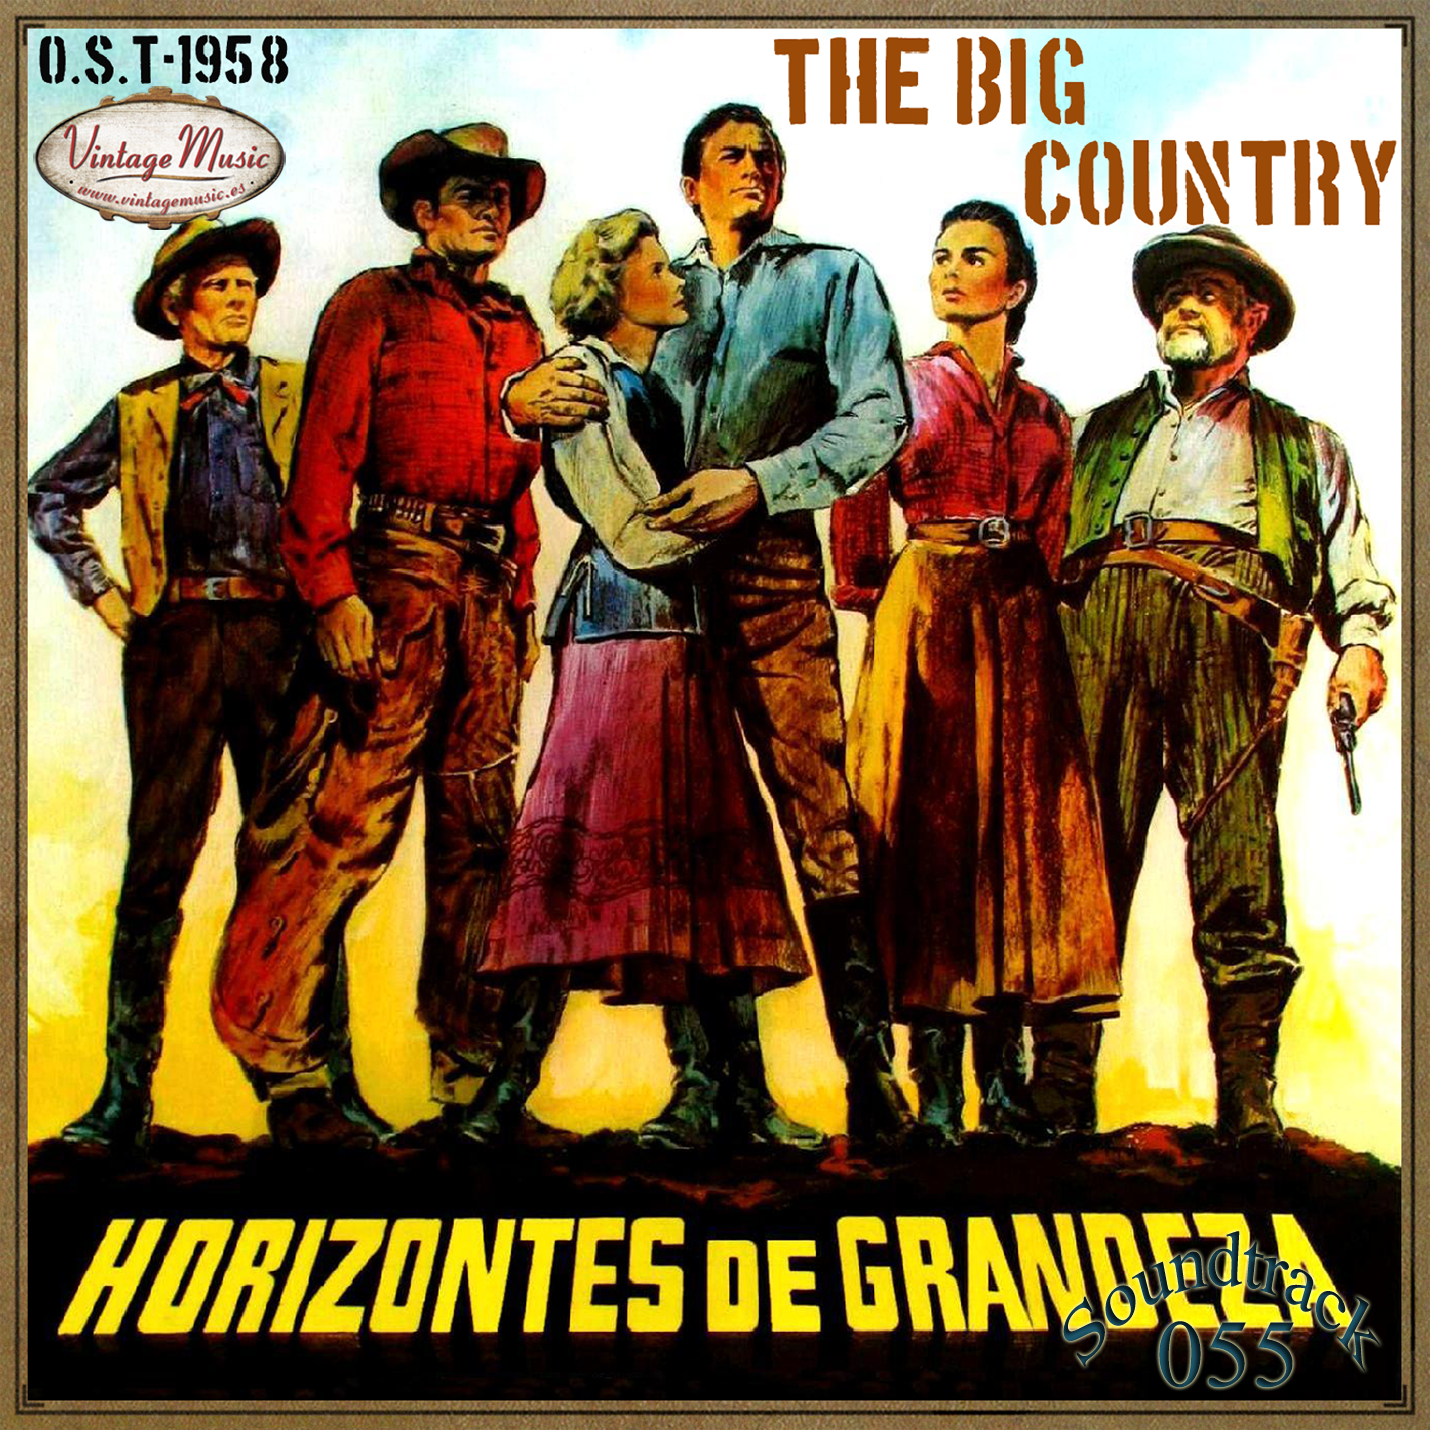 The Big Country, Horizontes De Grandeza (Colección Soundtrack - #55)